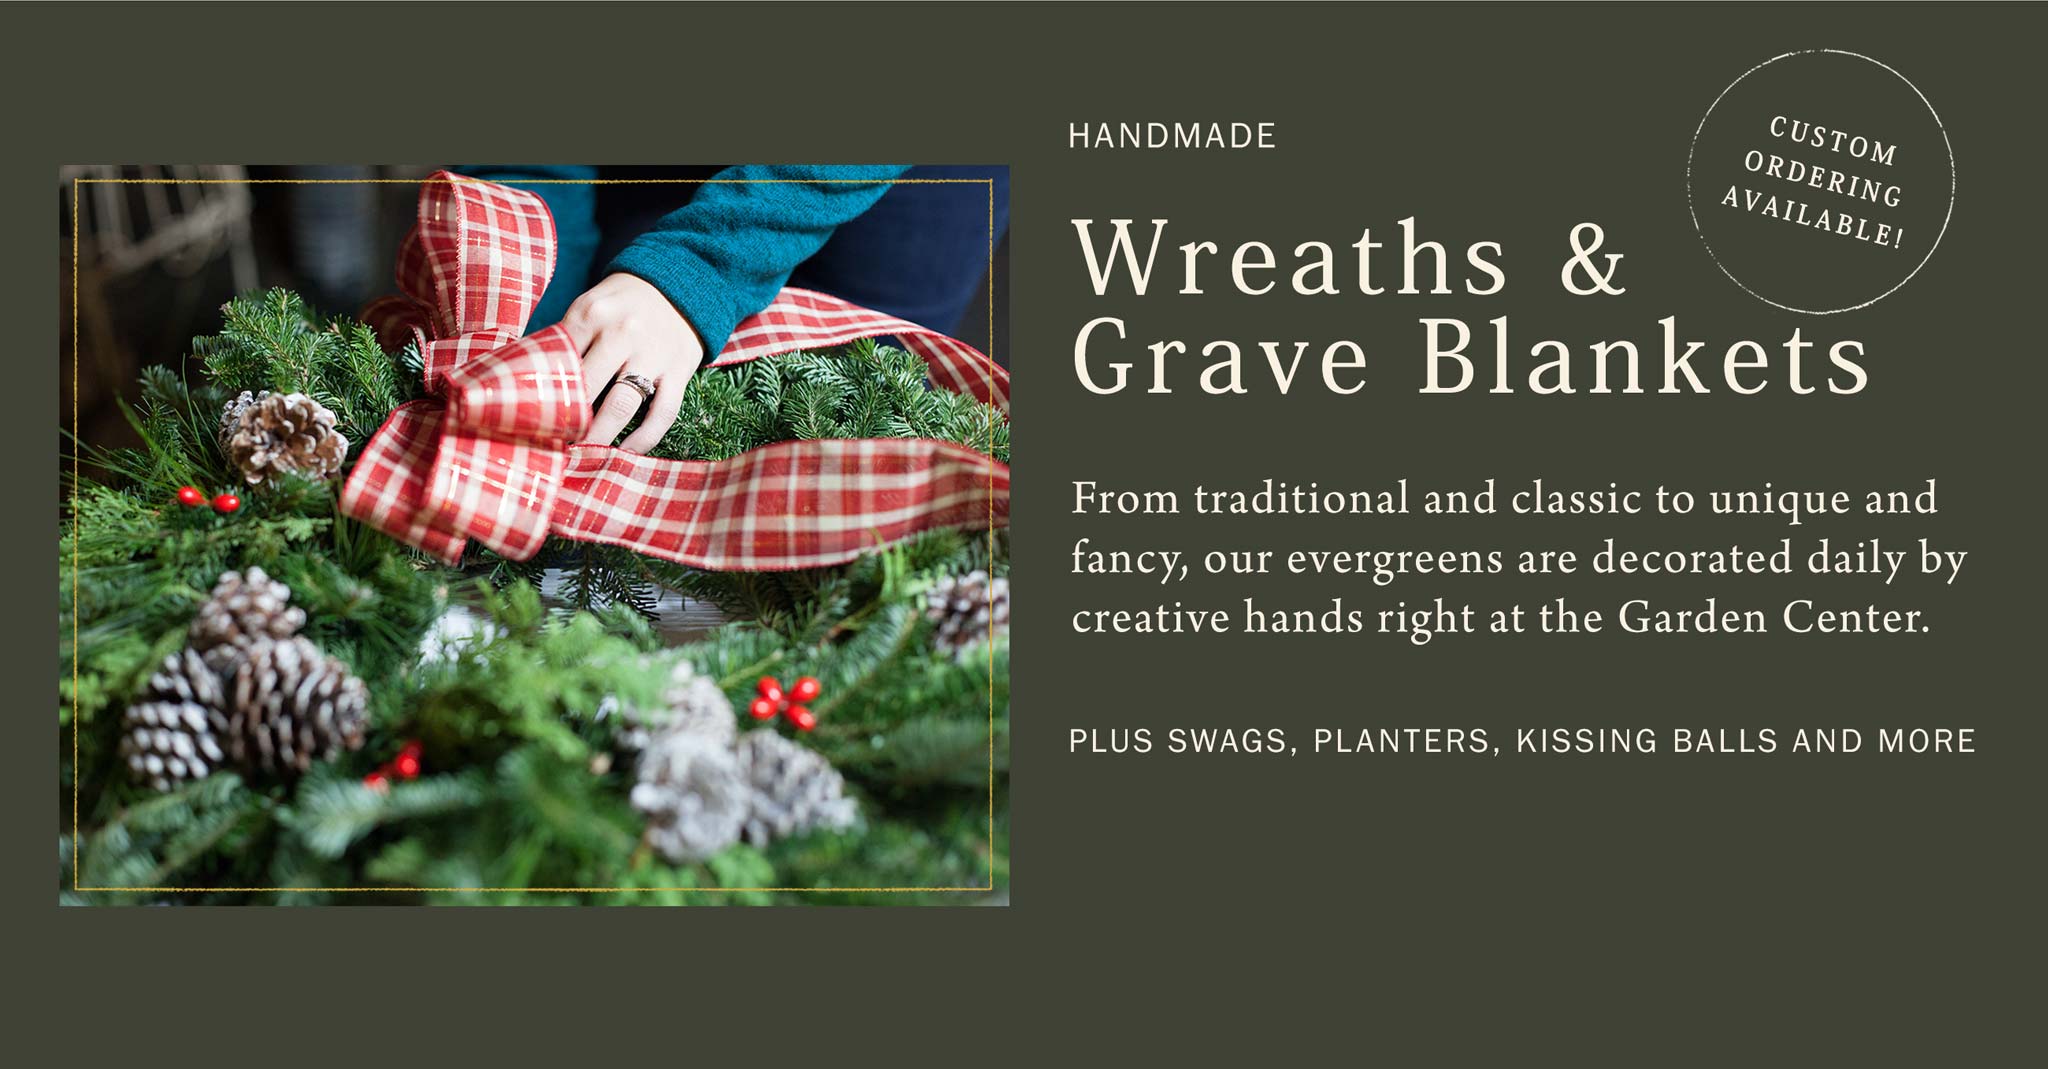 Handmade wreaths and grave blankets at Hoen's Garden Center